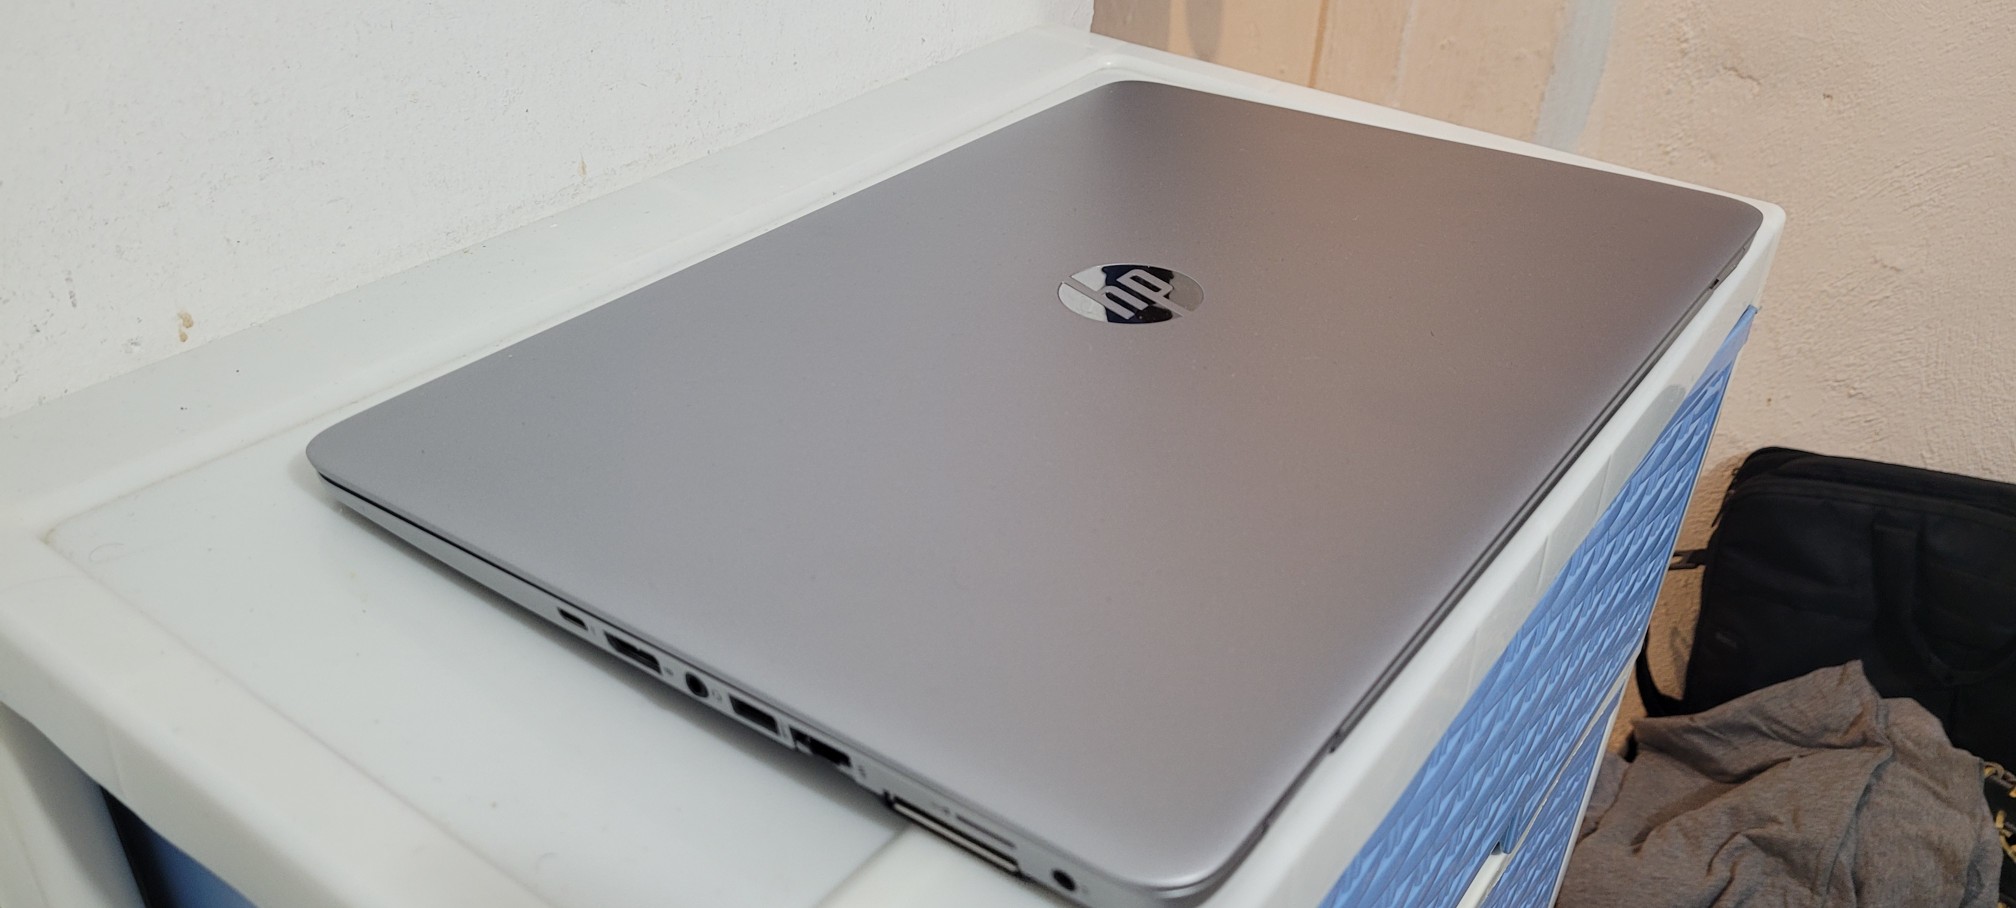 computadoras y laptops - Laptop hp Touch 14 Pulg Core i5 7ma Gen Ram 8gb ddr4 Disco 500gb 2